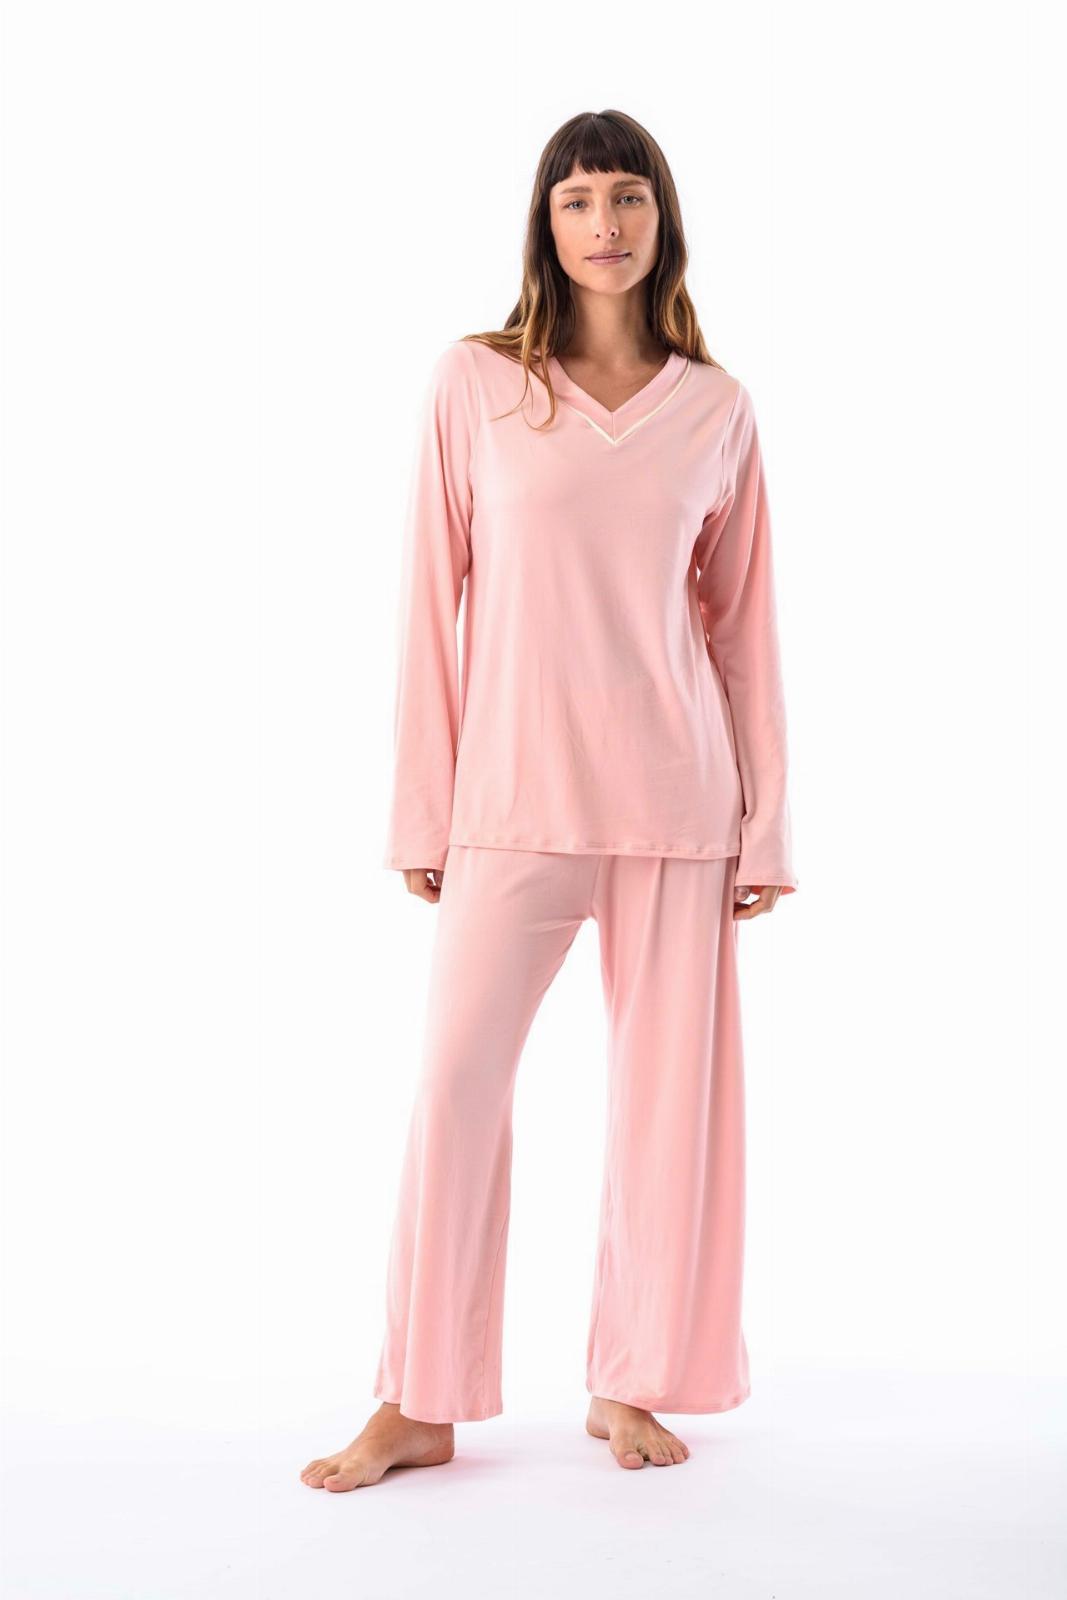 Cala - Pijama Manga Larga escote en V rosado l